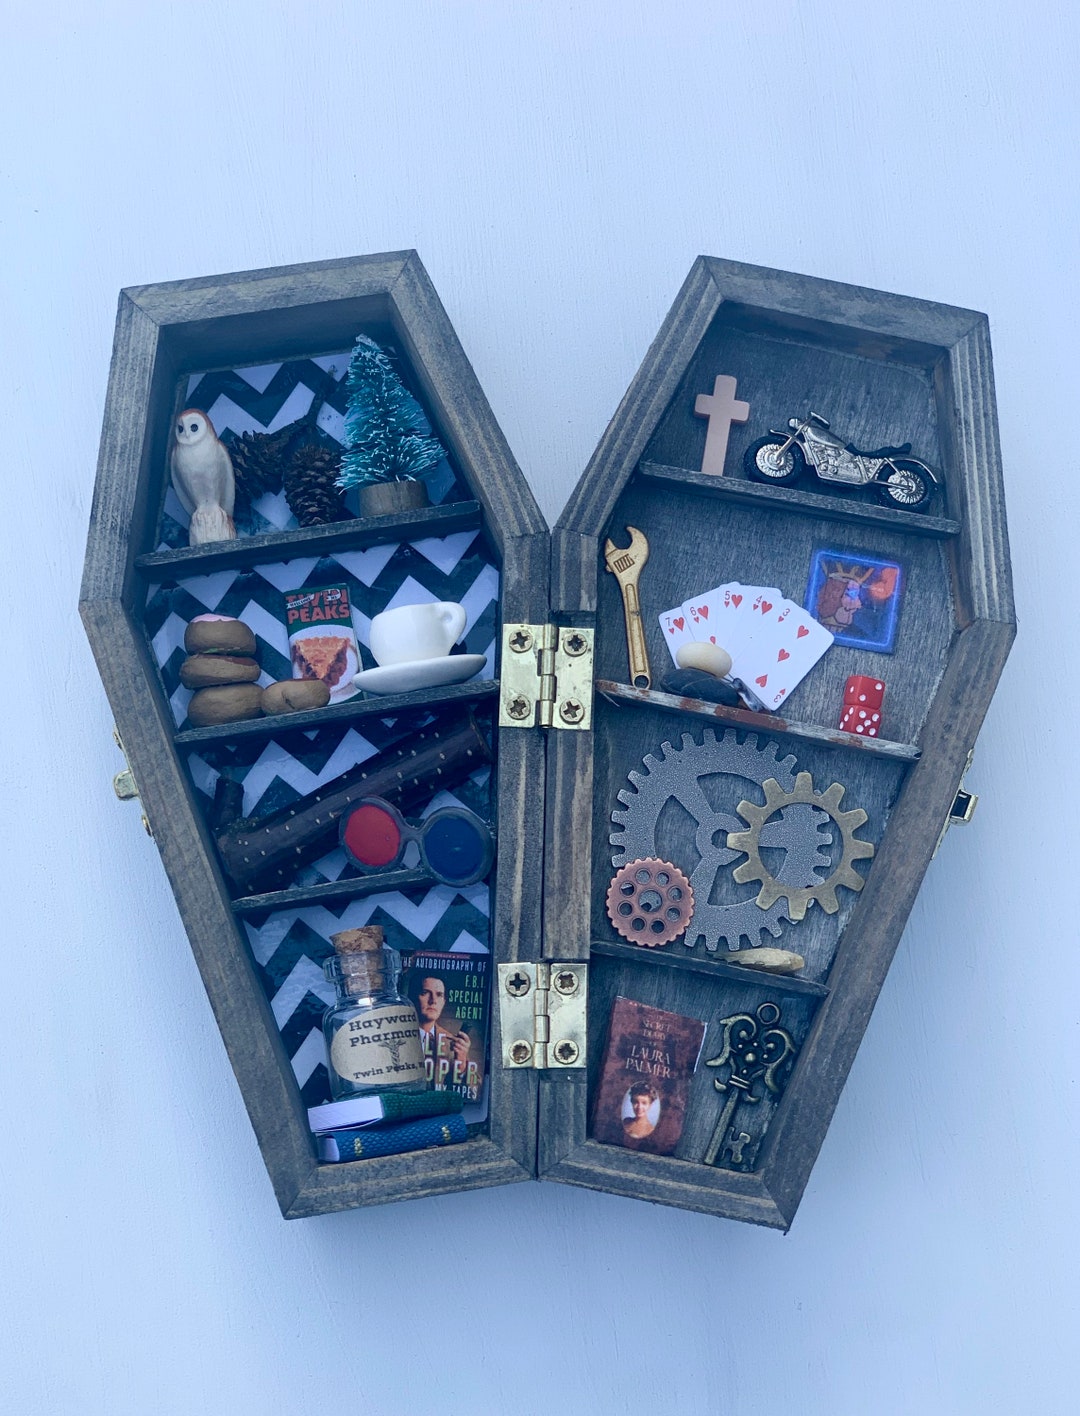 Twin Peaks Mini Wooden Coffin Book Shelf Box David Lynch - Etsy